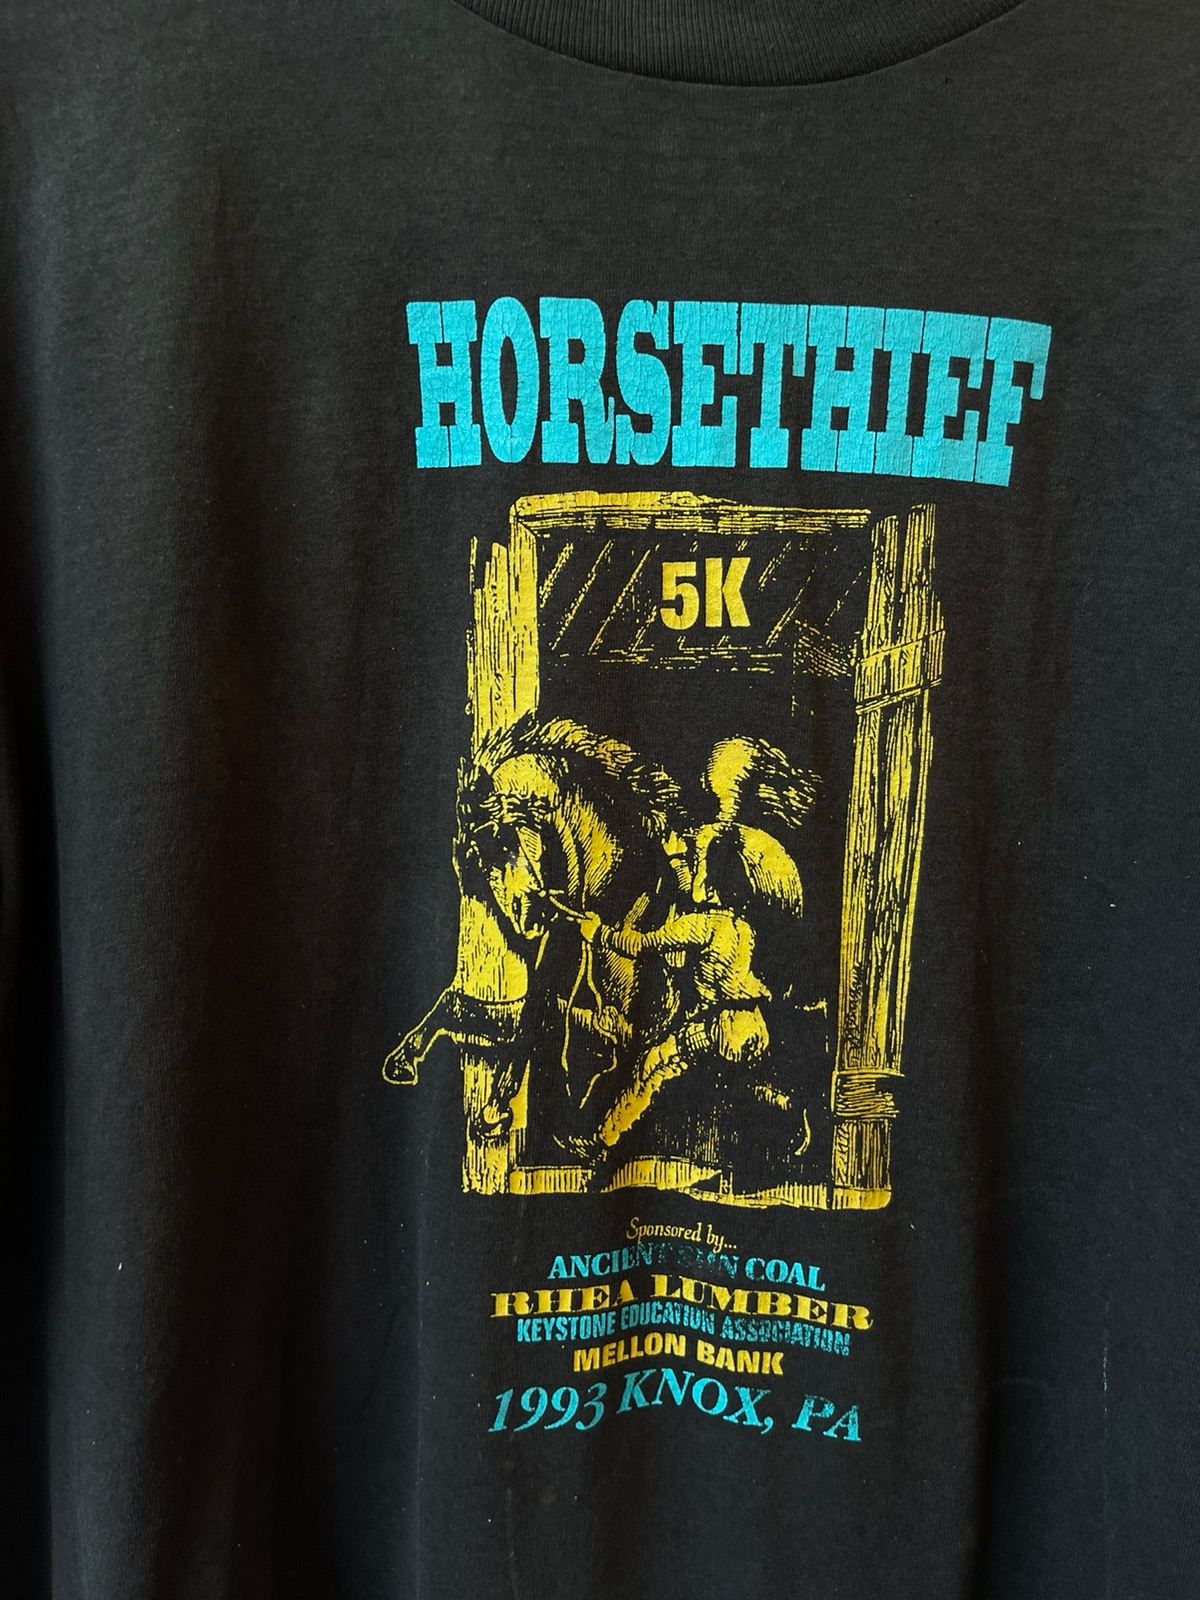 Vintage 90s Cowboy Horse Thief ! Shirt 4Gseller